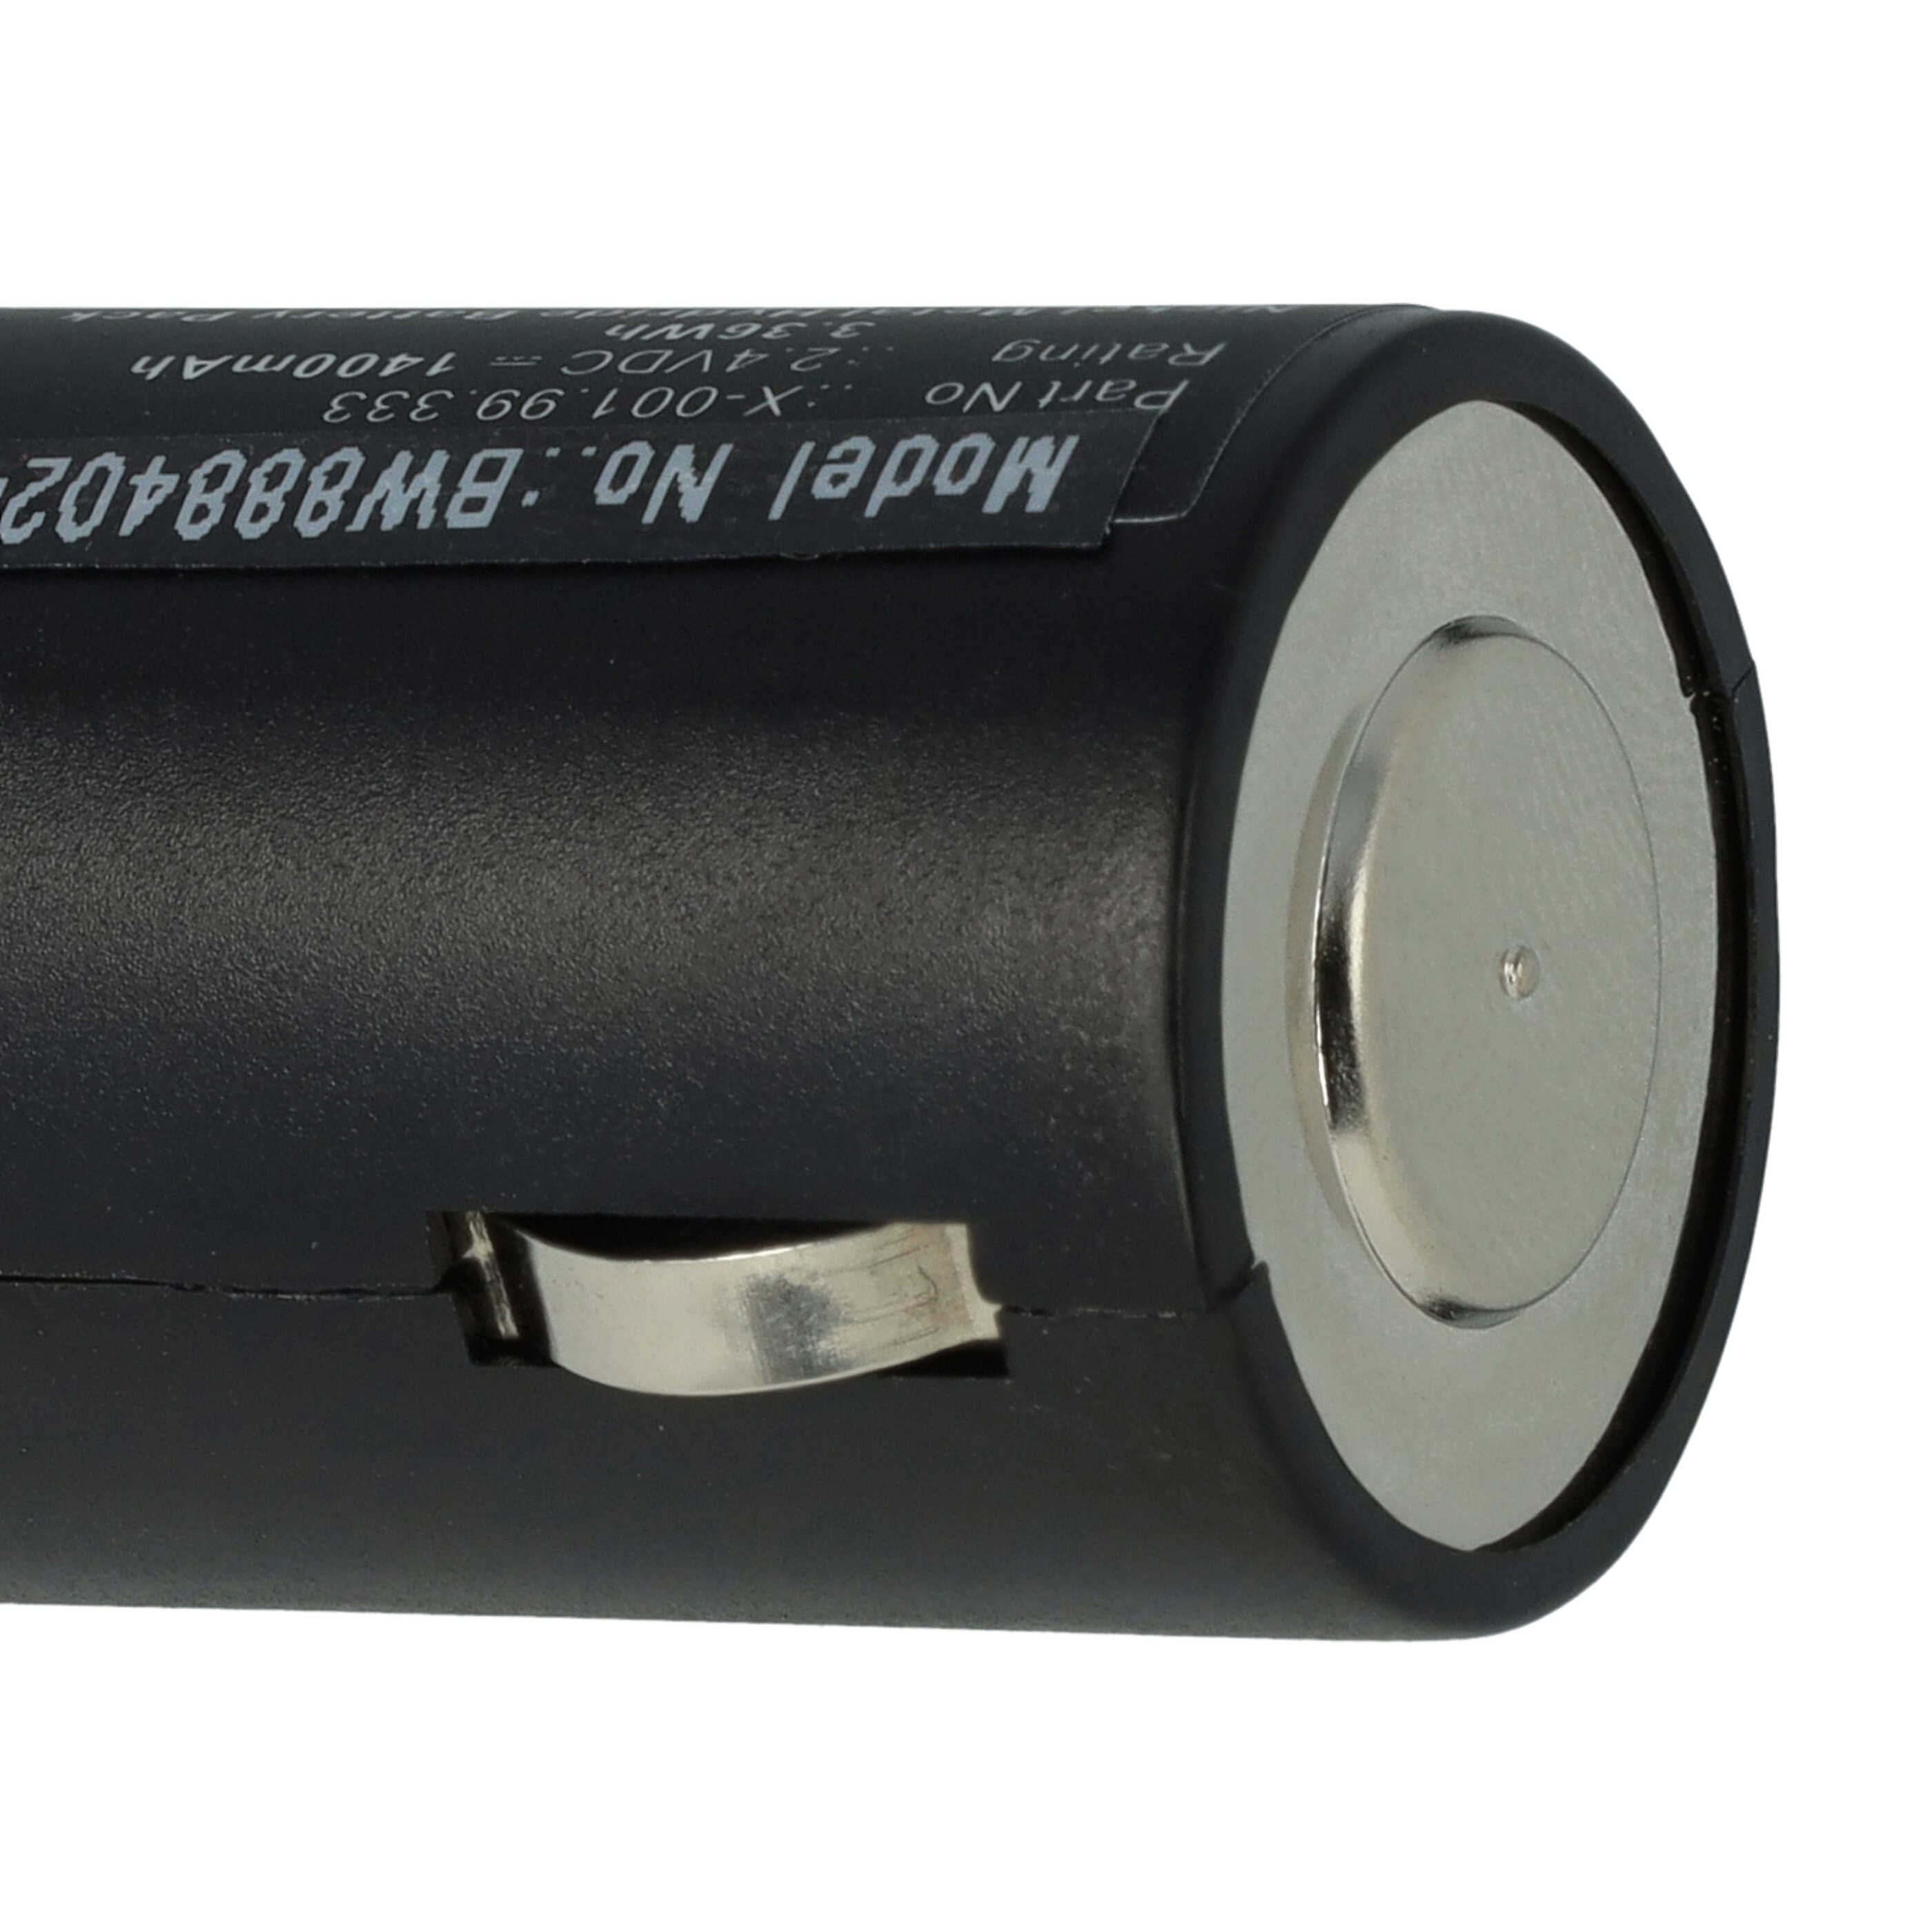 Batería reemplaza Heine X-001.99.333 para tecnología médica - 1400 mAh, 2,4 V